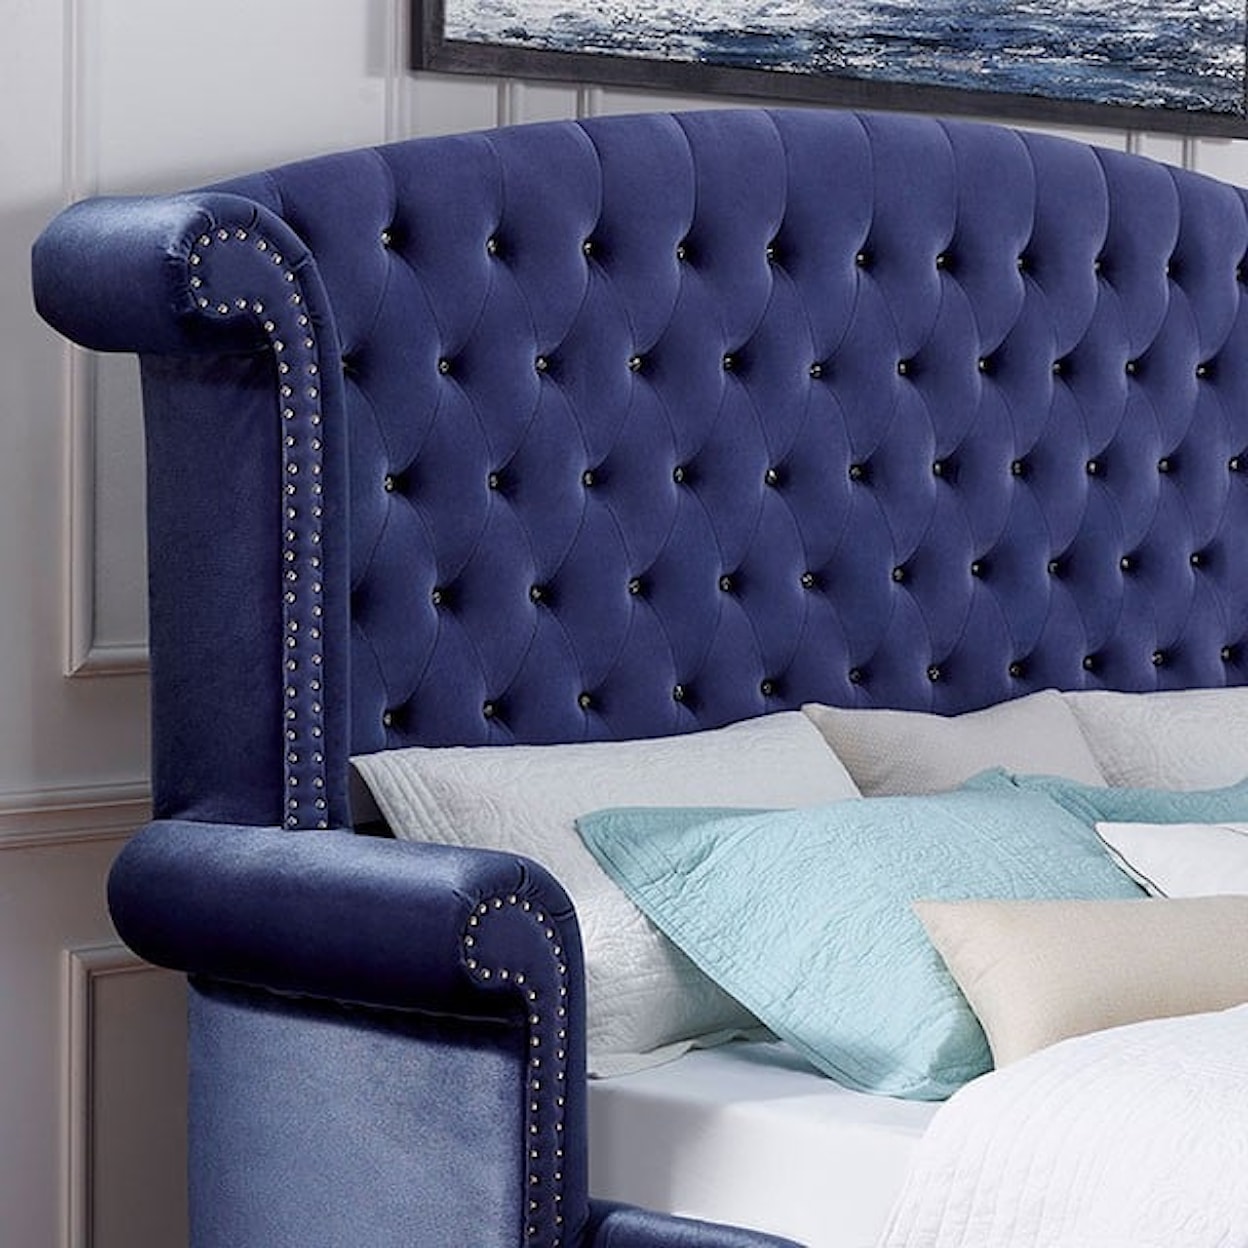 Furniture of America - FOA Alzir King Bed, Blue